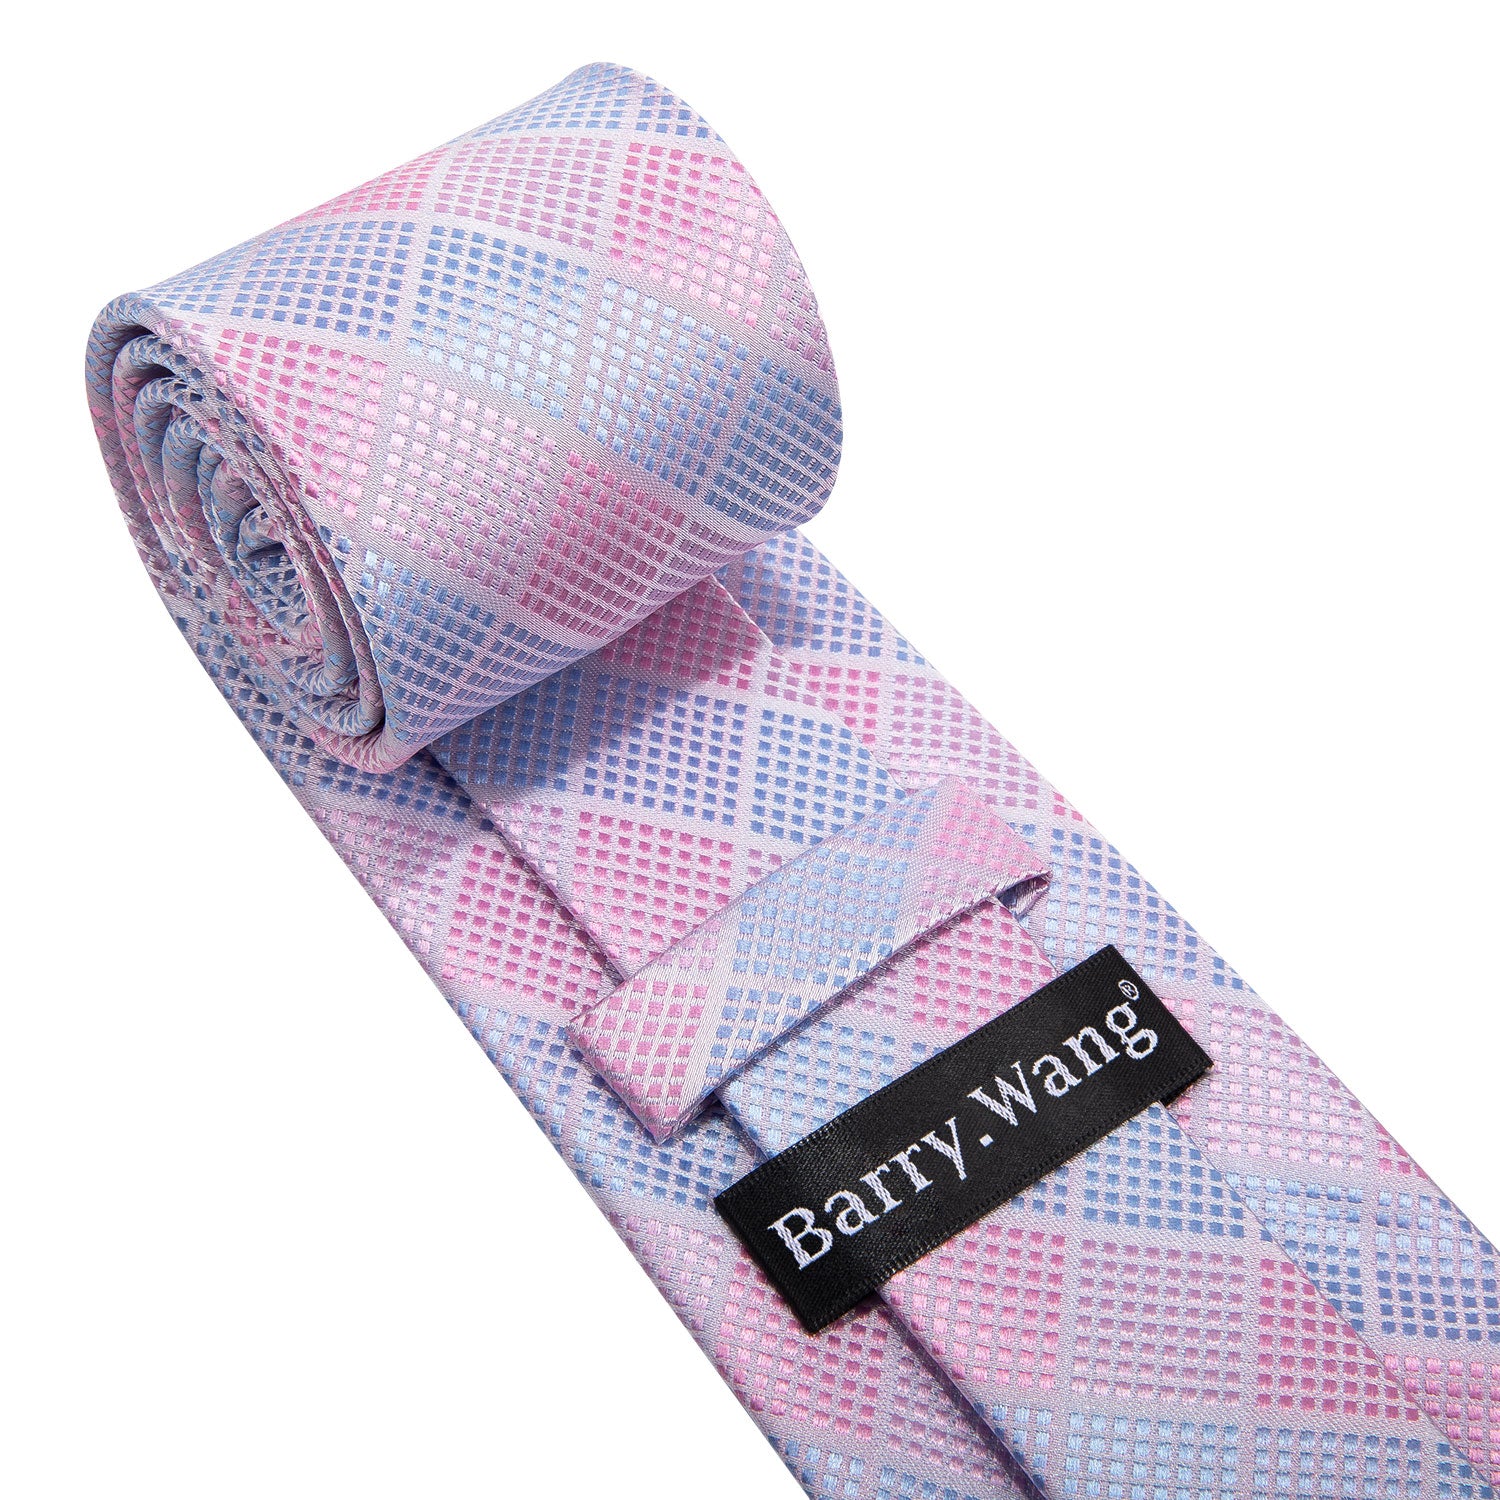 Barry.wang Pink Tie Sky-blue Plaid Men's Silk Tie Hanky Cufflinks Set